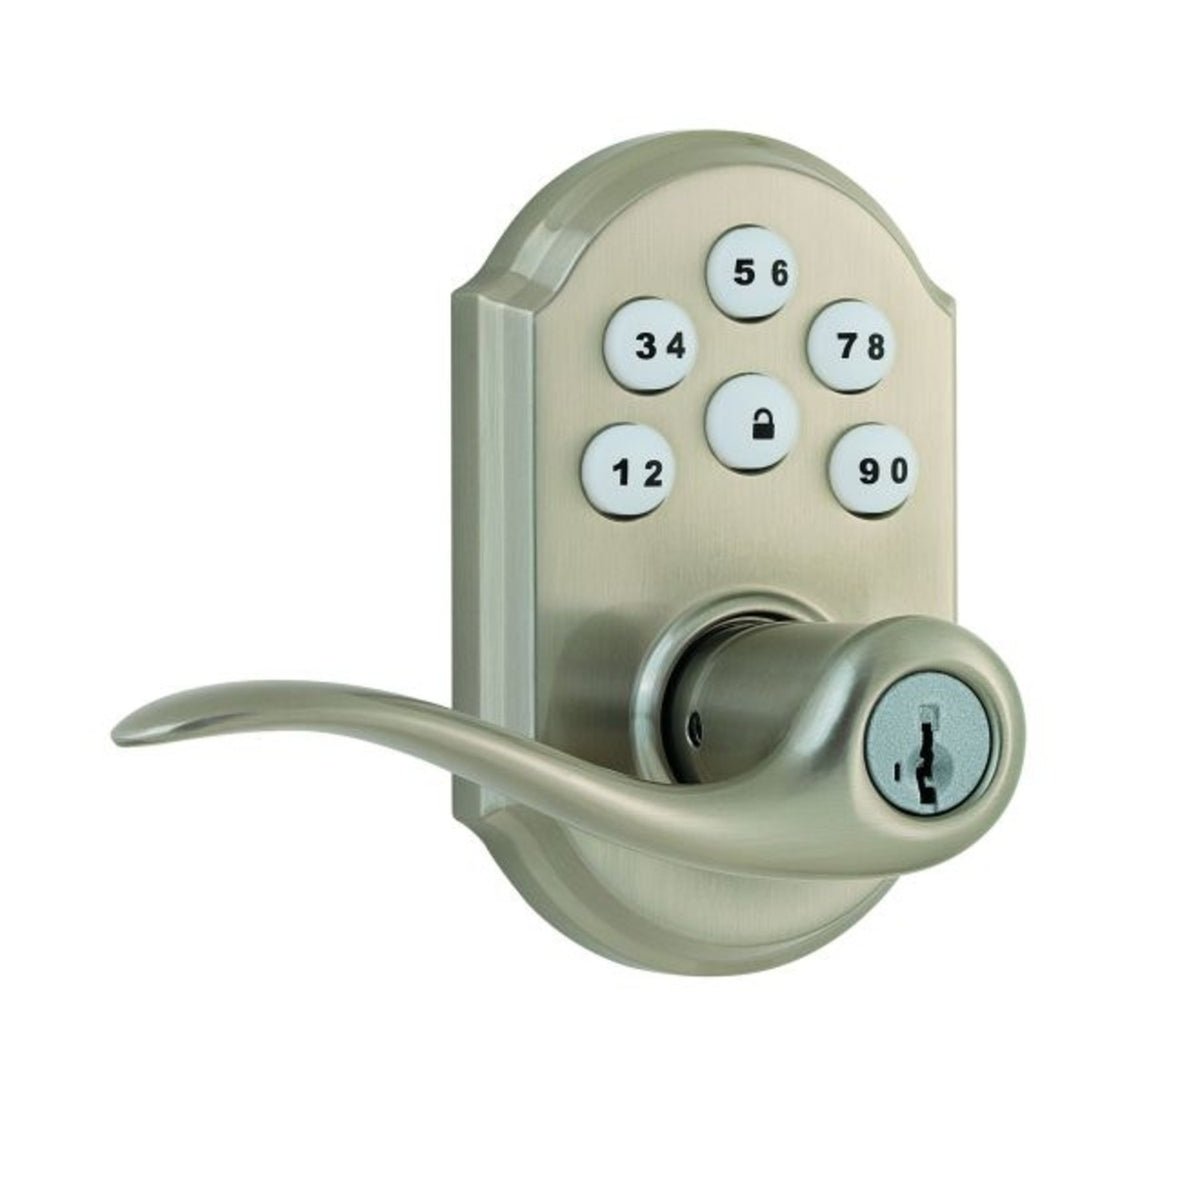 Weiser Lock GED1450TC15S Smartcode Electronic Deadbolt With Smart Key, Satin Nickel